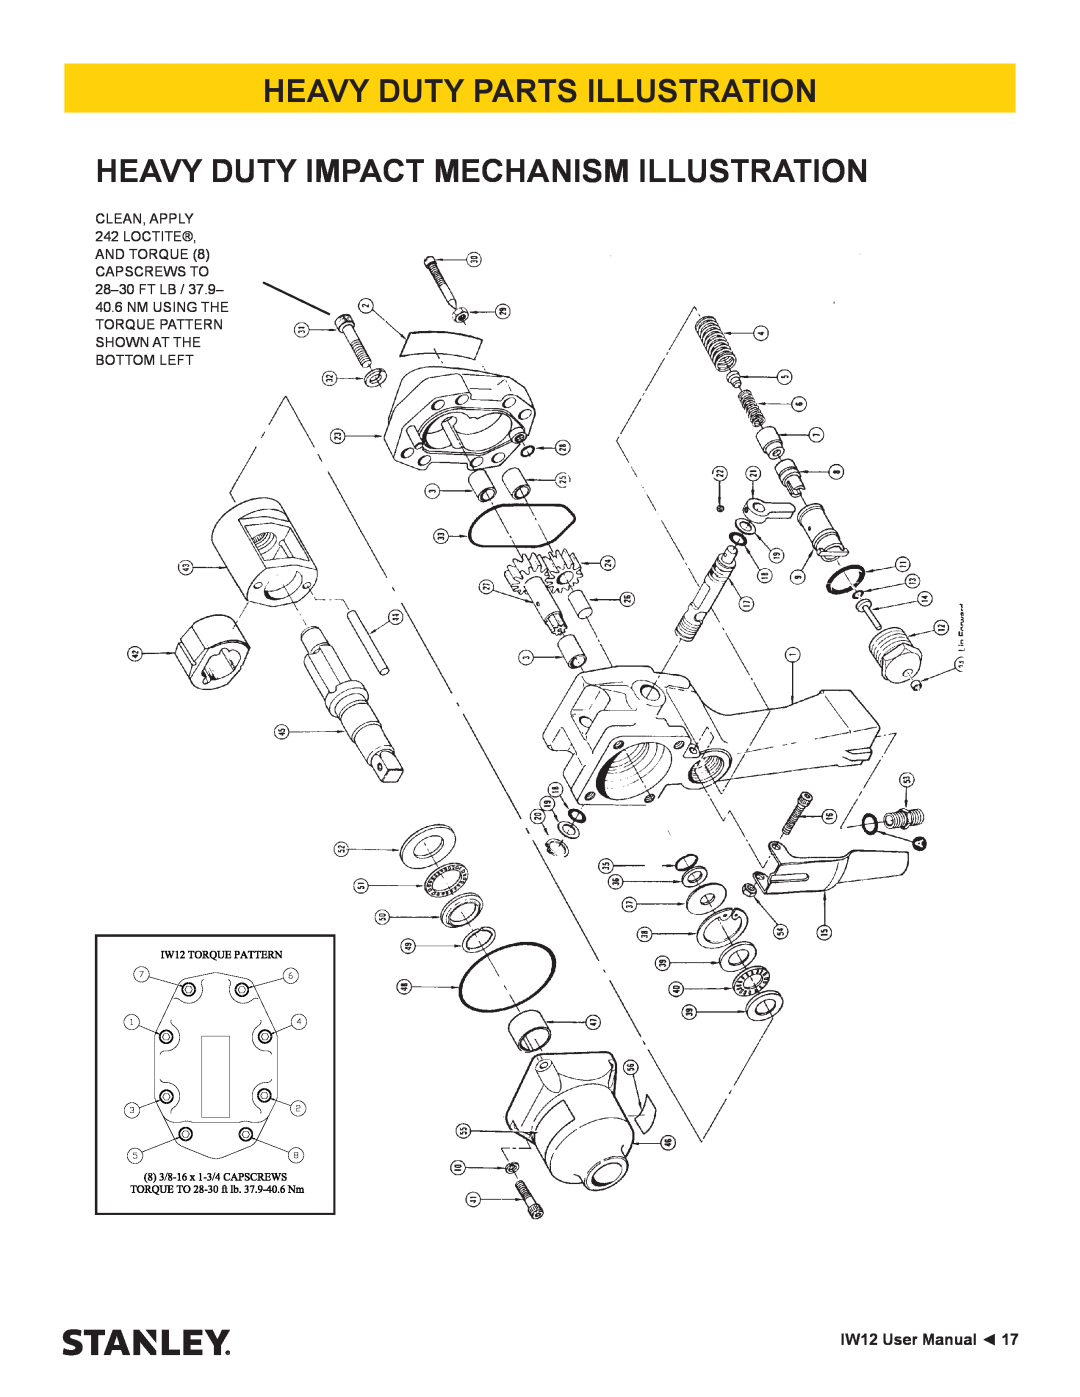 Stanley Black & Decker Heavy Duty Parts Illustration, Heavy Duty Impact Mechanism Illustration, IW12 User Manual 